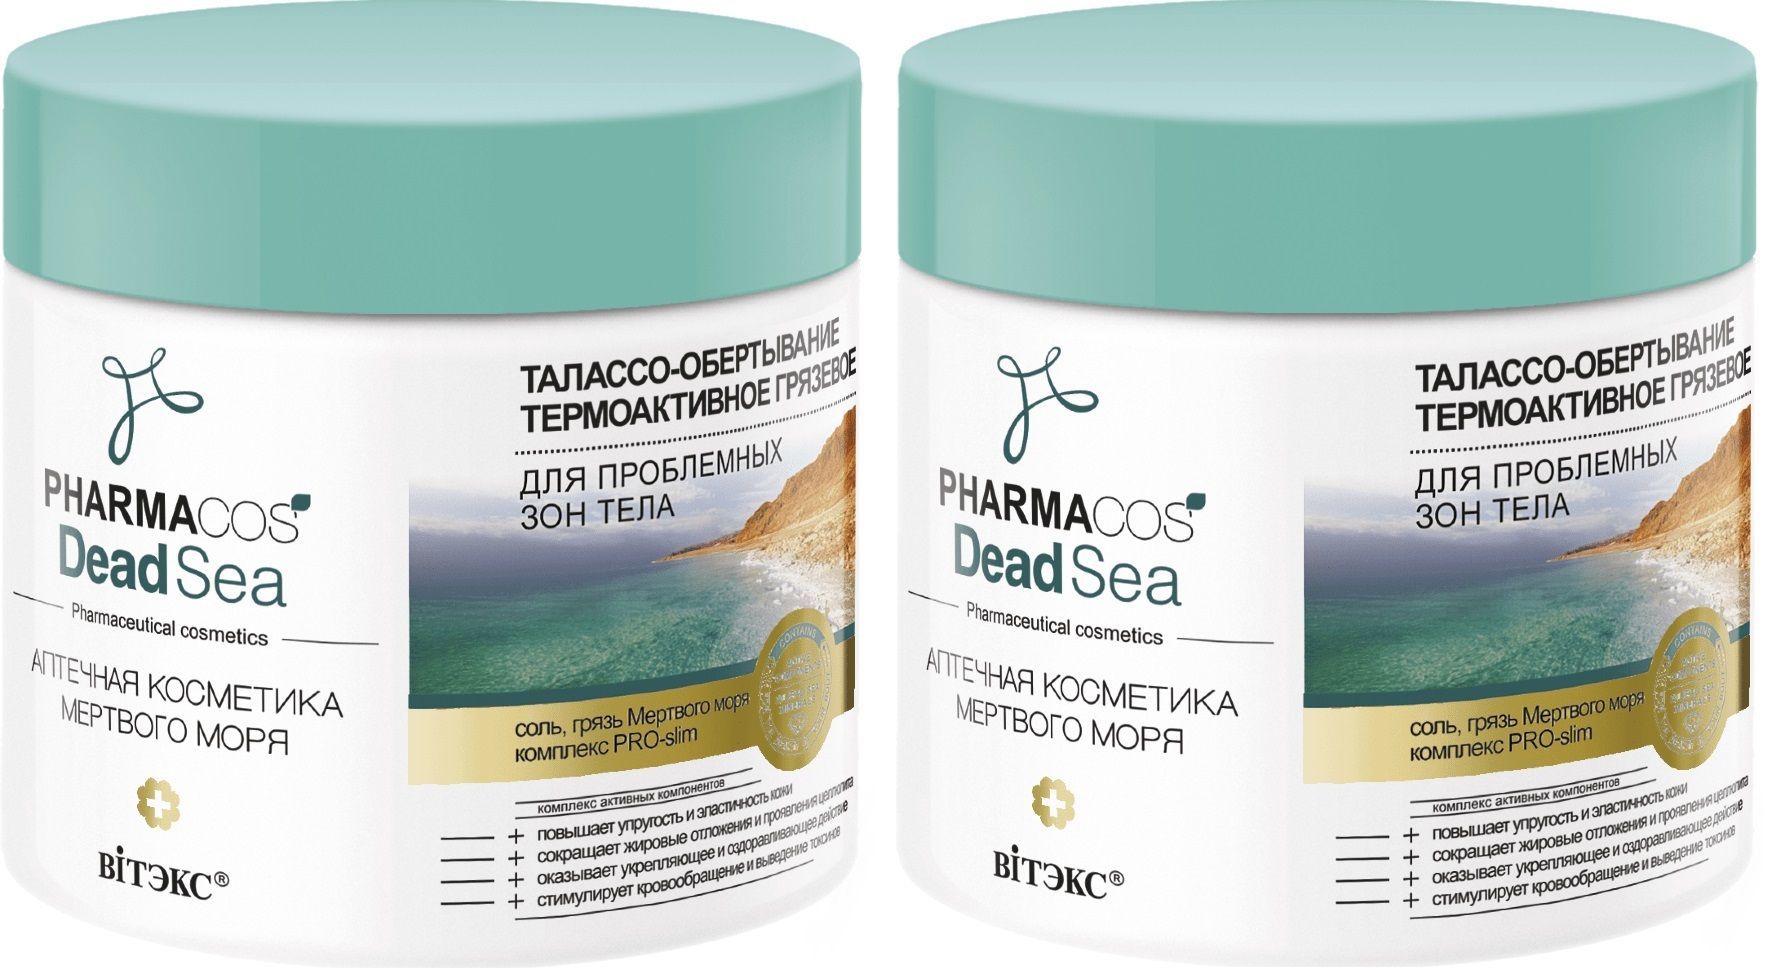 Маска для волос сияние. Аптечная косметика мертвого моря Витекс. Витэкс Pharmacos Dead Sea маска-скраб. Витекс фармакос Dead Sea. Талассо обертывание Pharmacos Dead Sea.